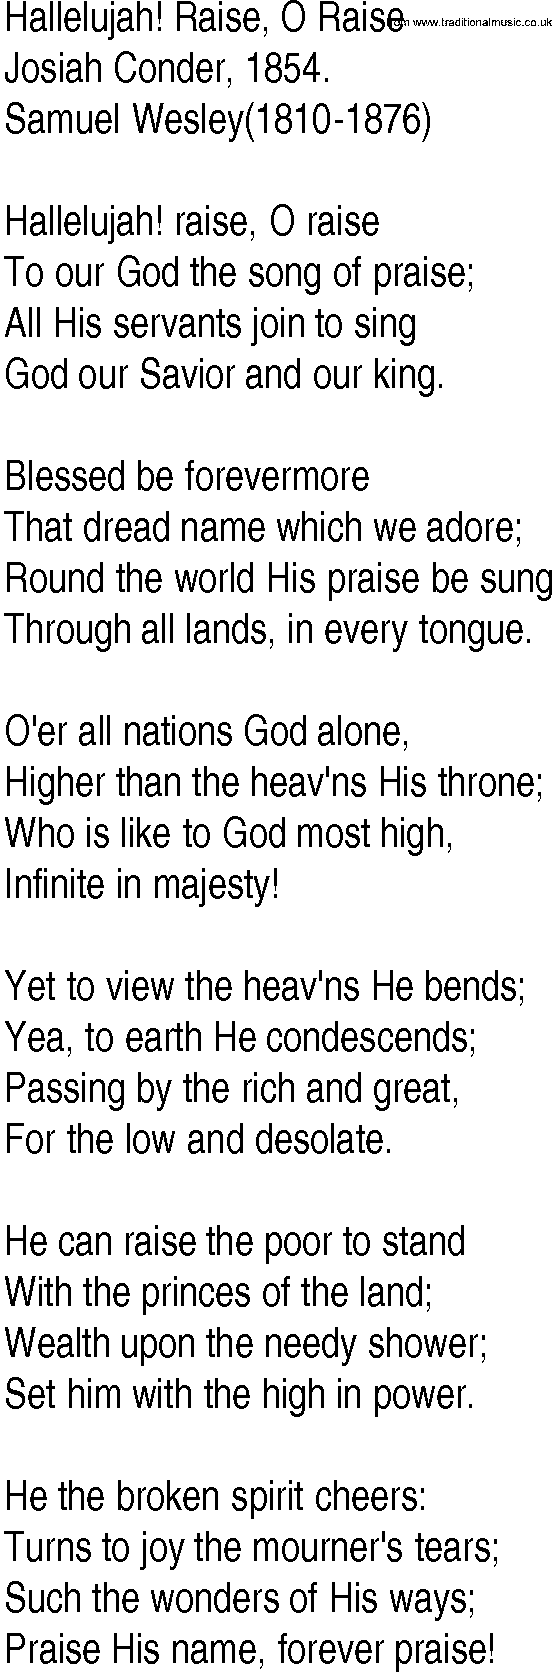 Hymn and Gospel Song: Hallelujah! Raise, O Raise by Josiah Conder lyrics